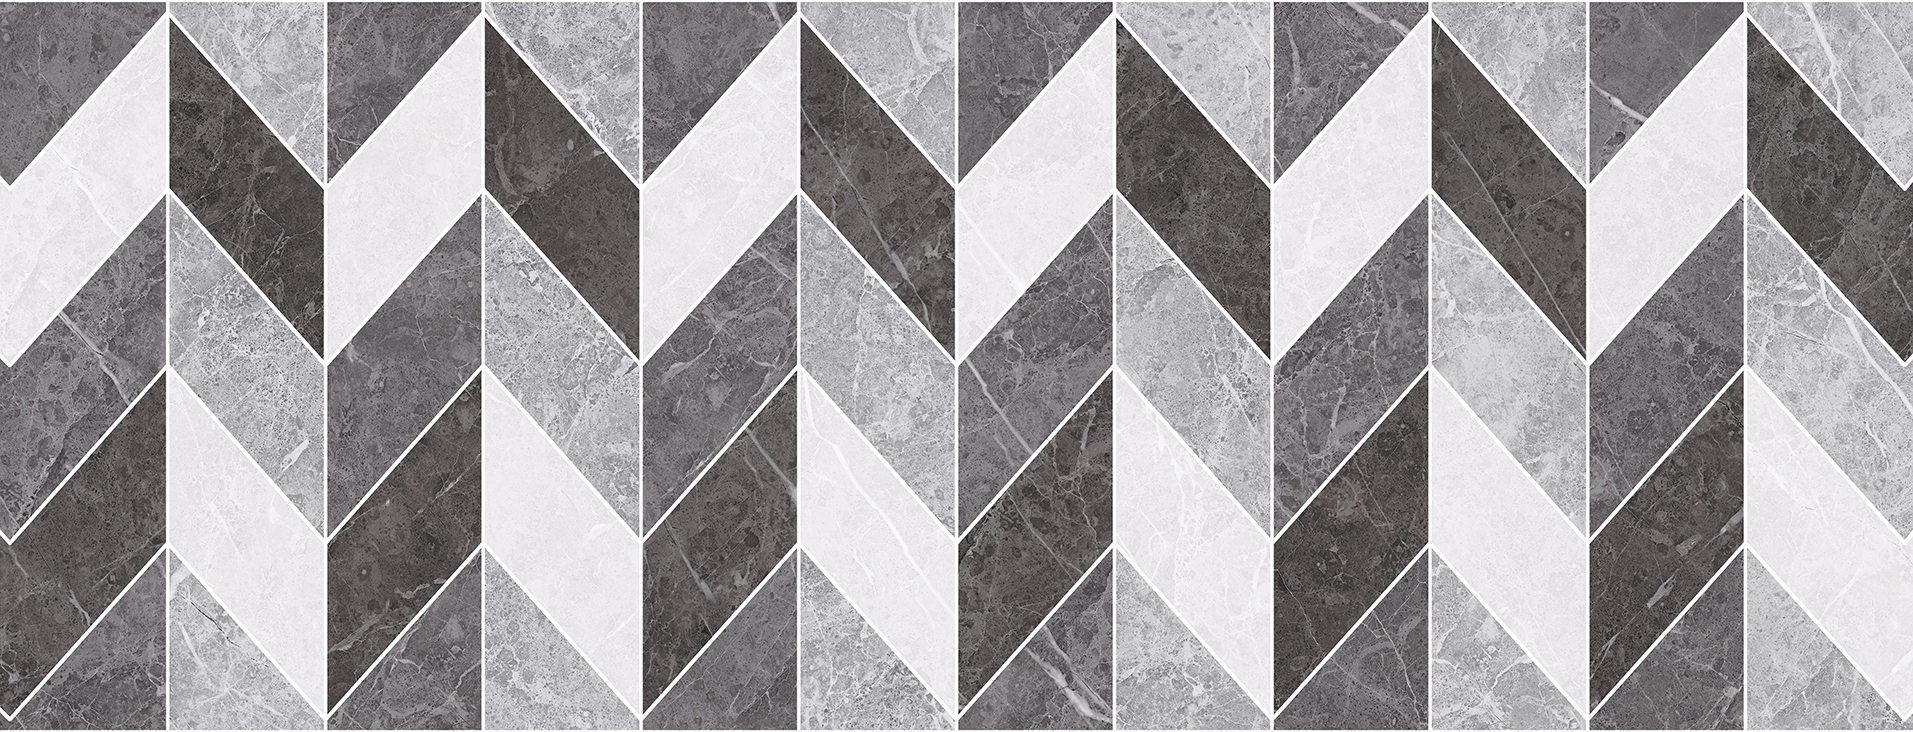 Grey wall tiles new design